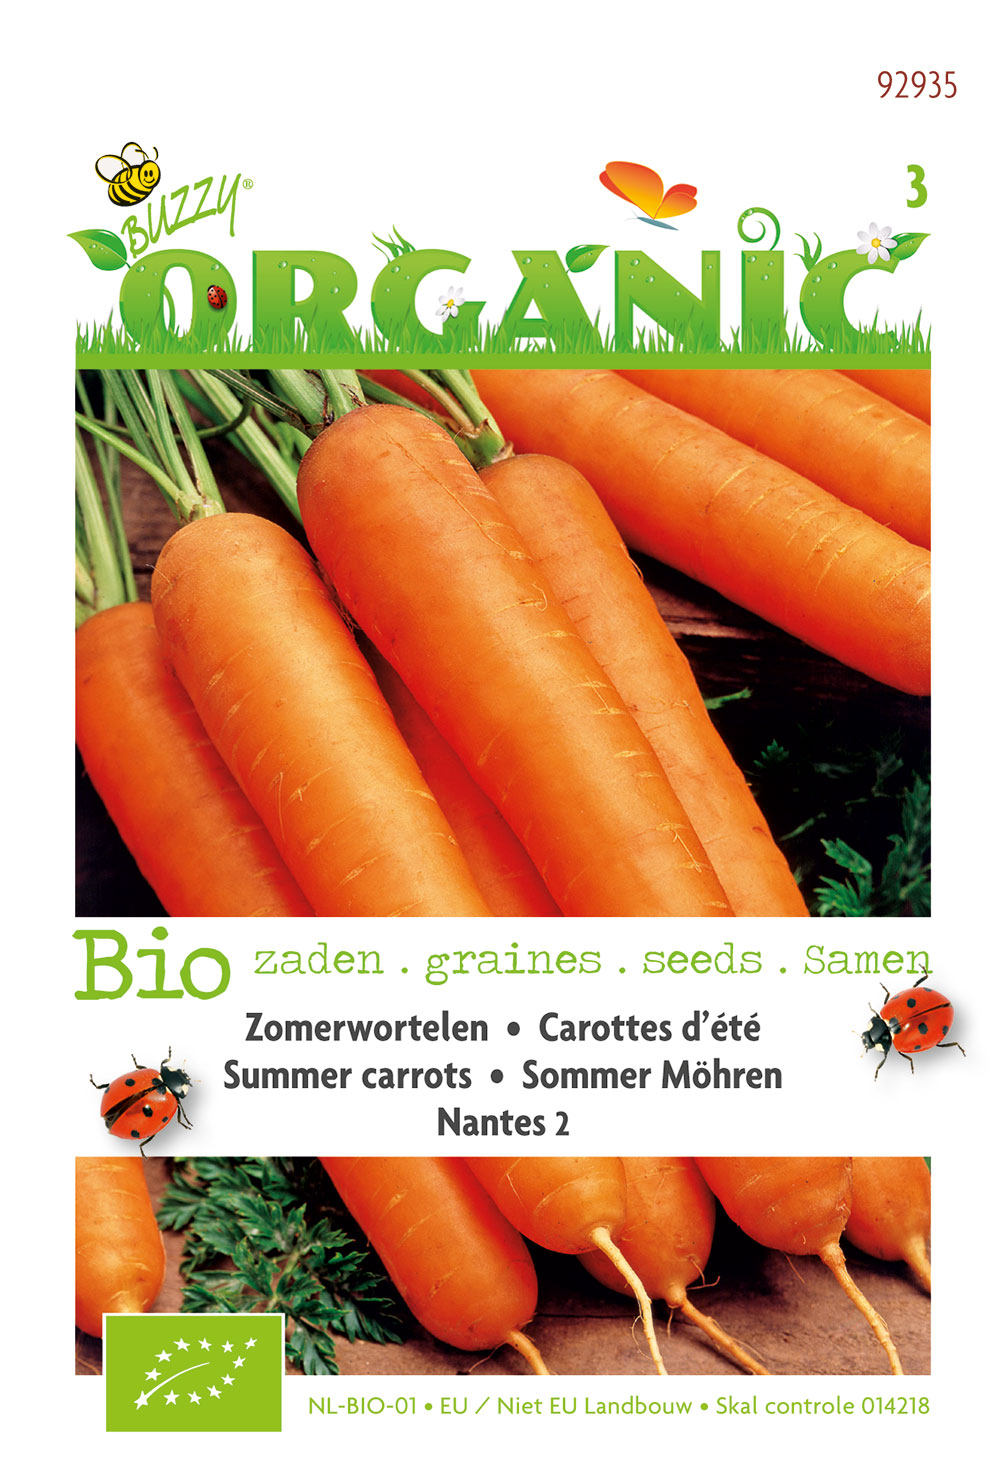 Organic zomerwortel nantes 1.5g